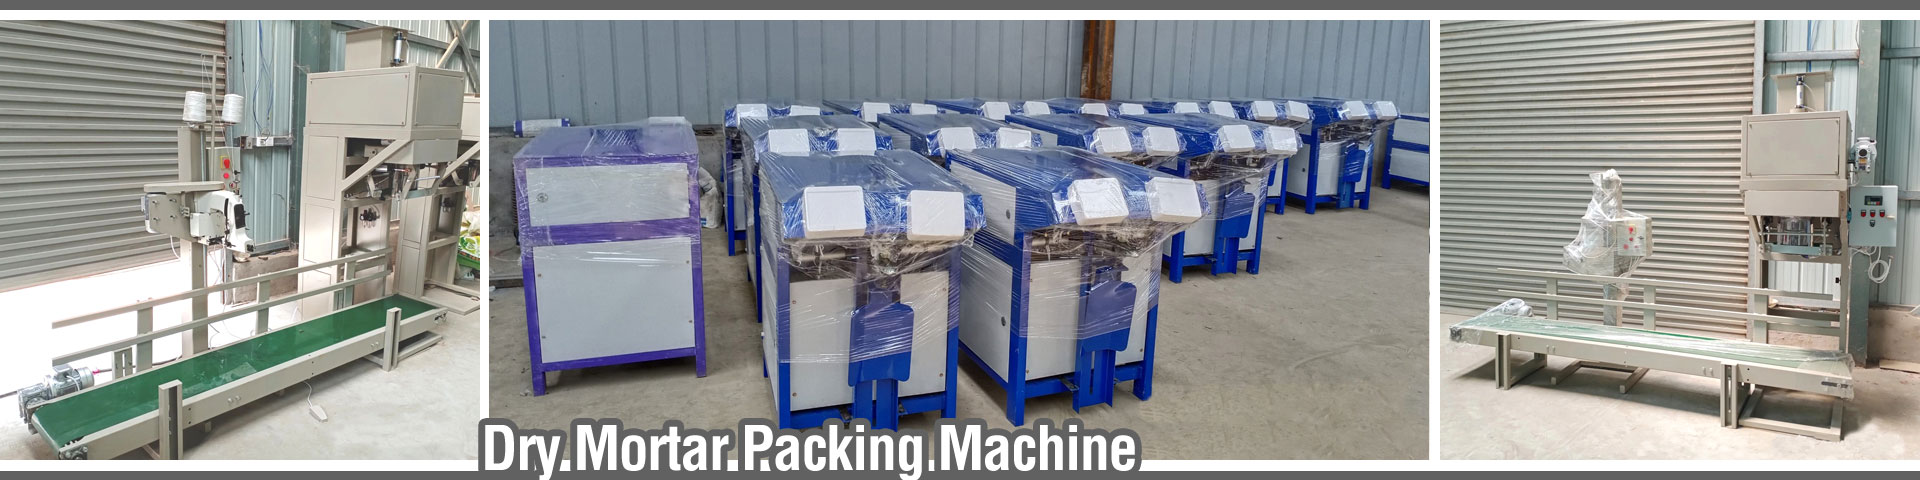 dry mortar packing machine manufacturer